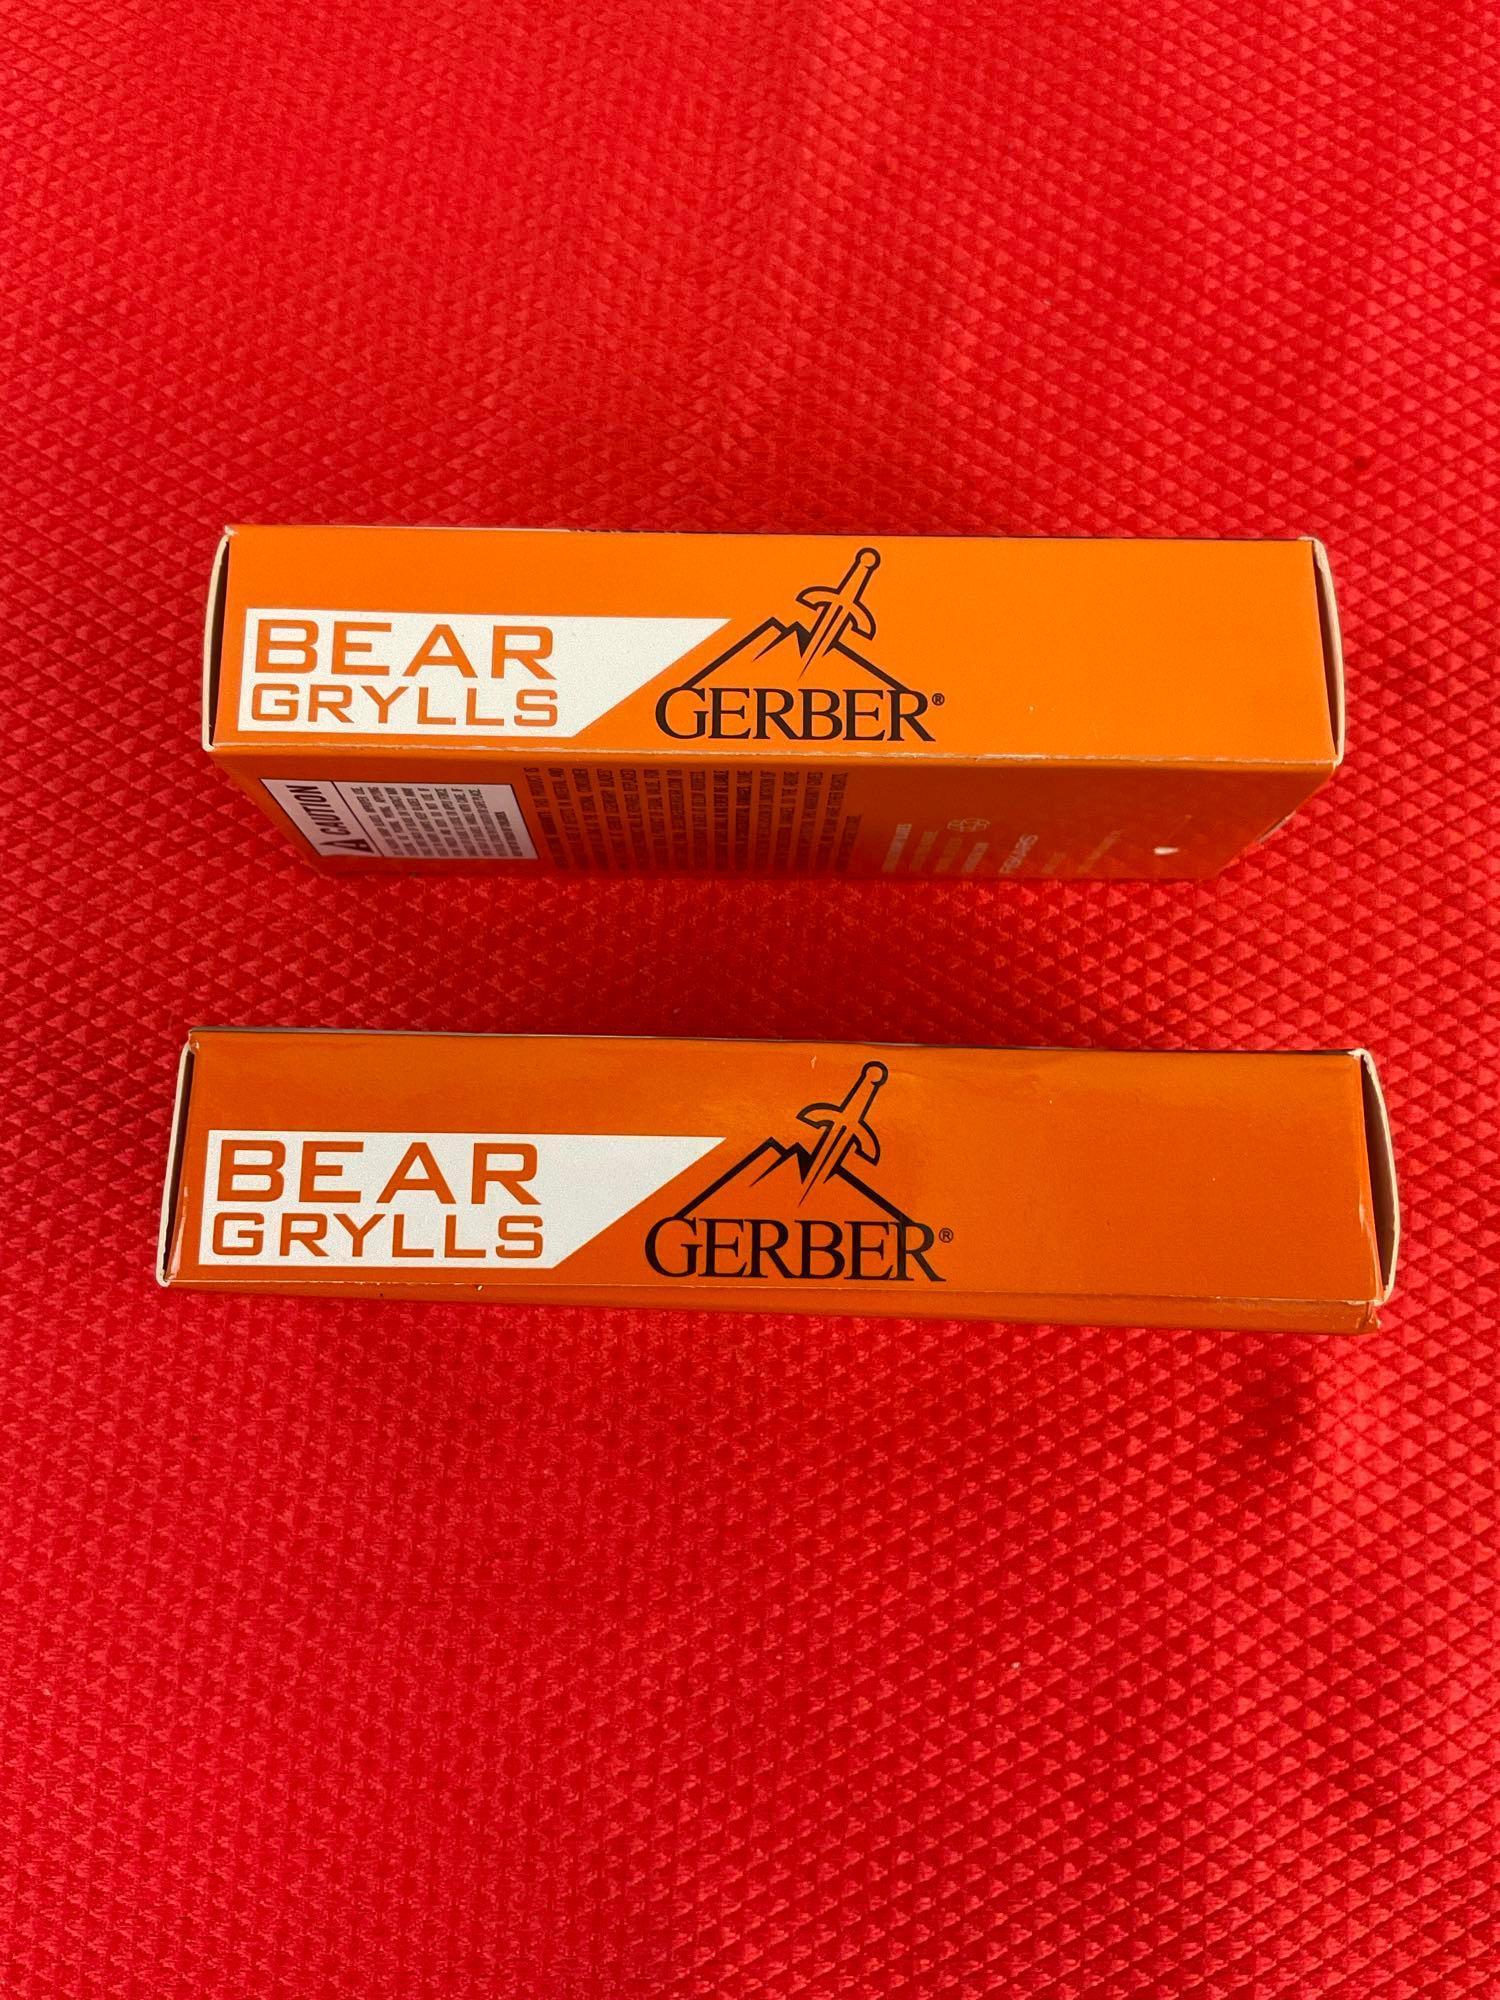 2 pcs Gerber Bear Grylls 3" Scout Folding Pocket Knives Model No. 30-000386. NIB. See pics.